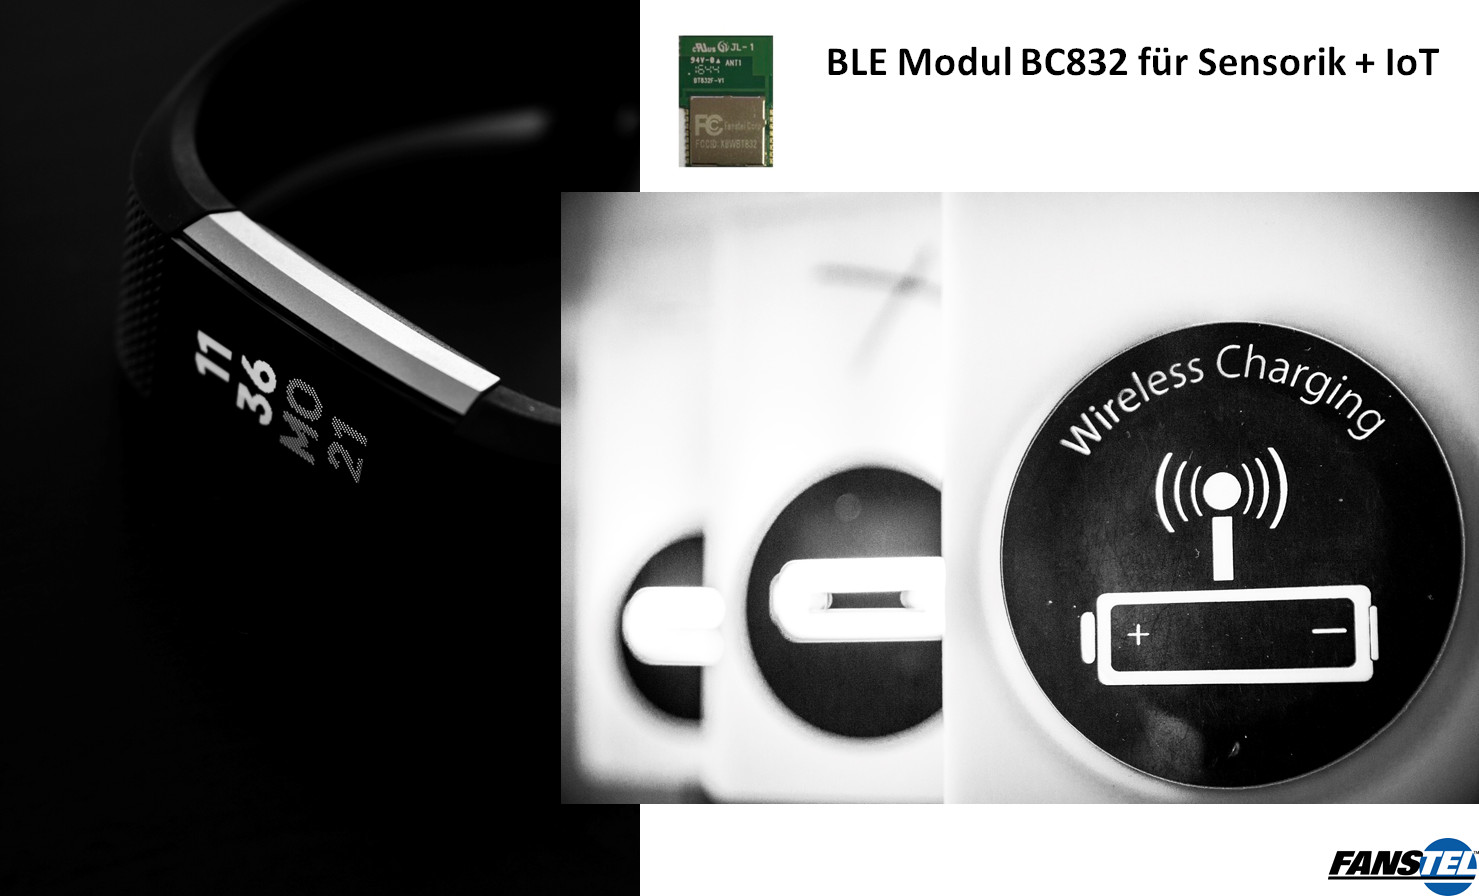 BLE Modul BC832 mit nRF52832 SoC